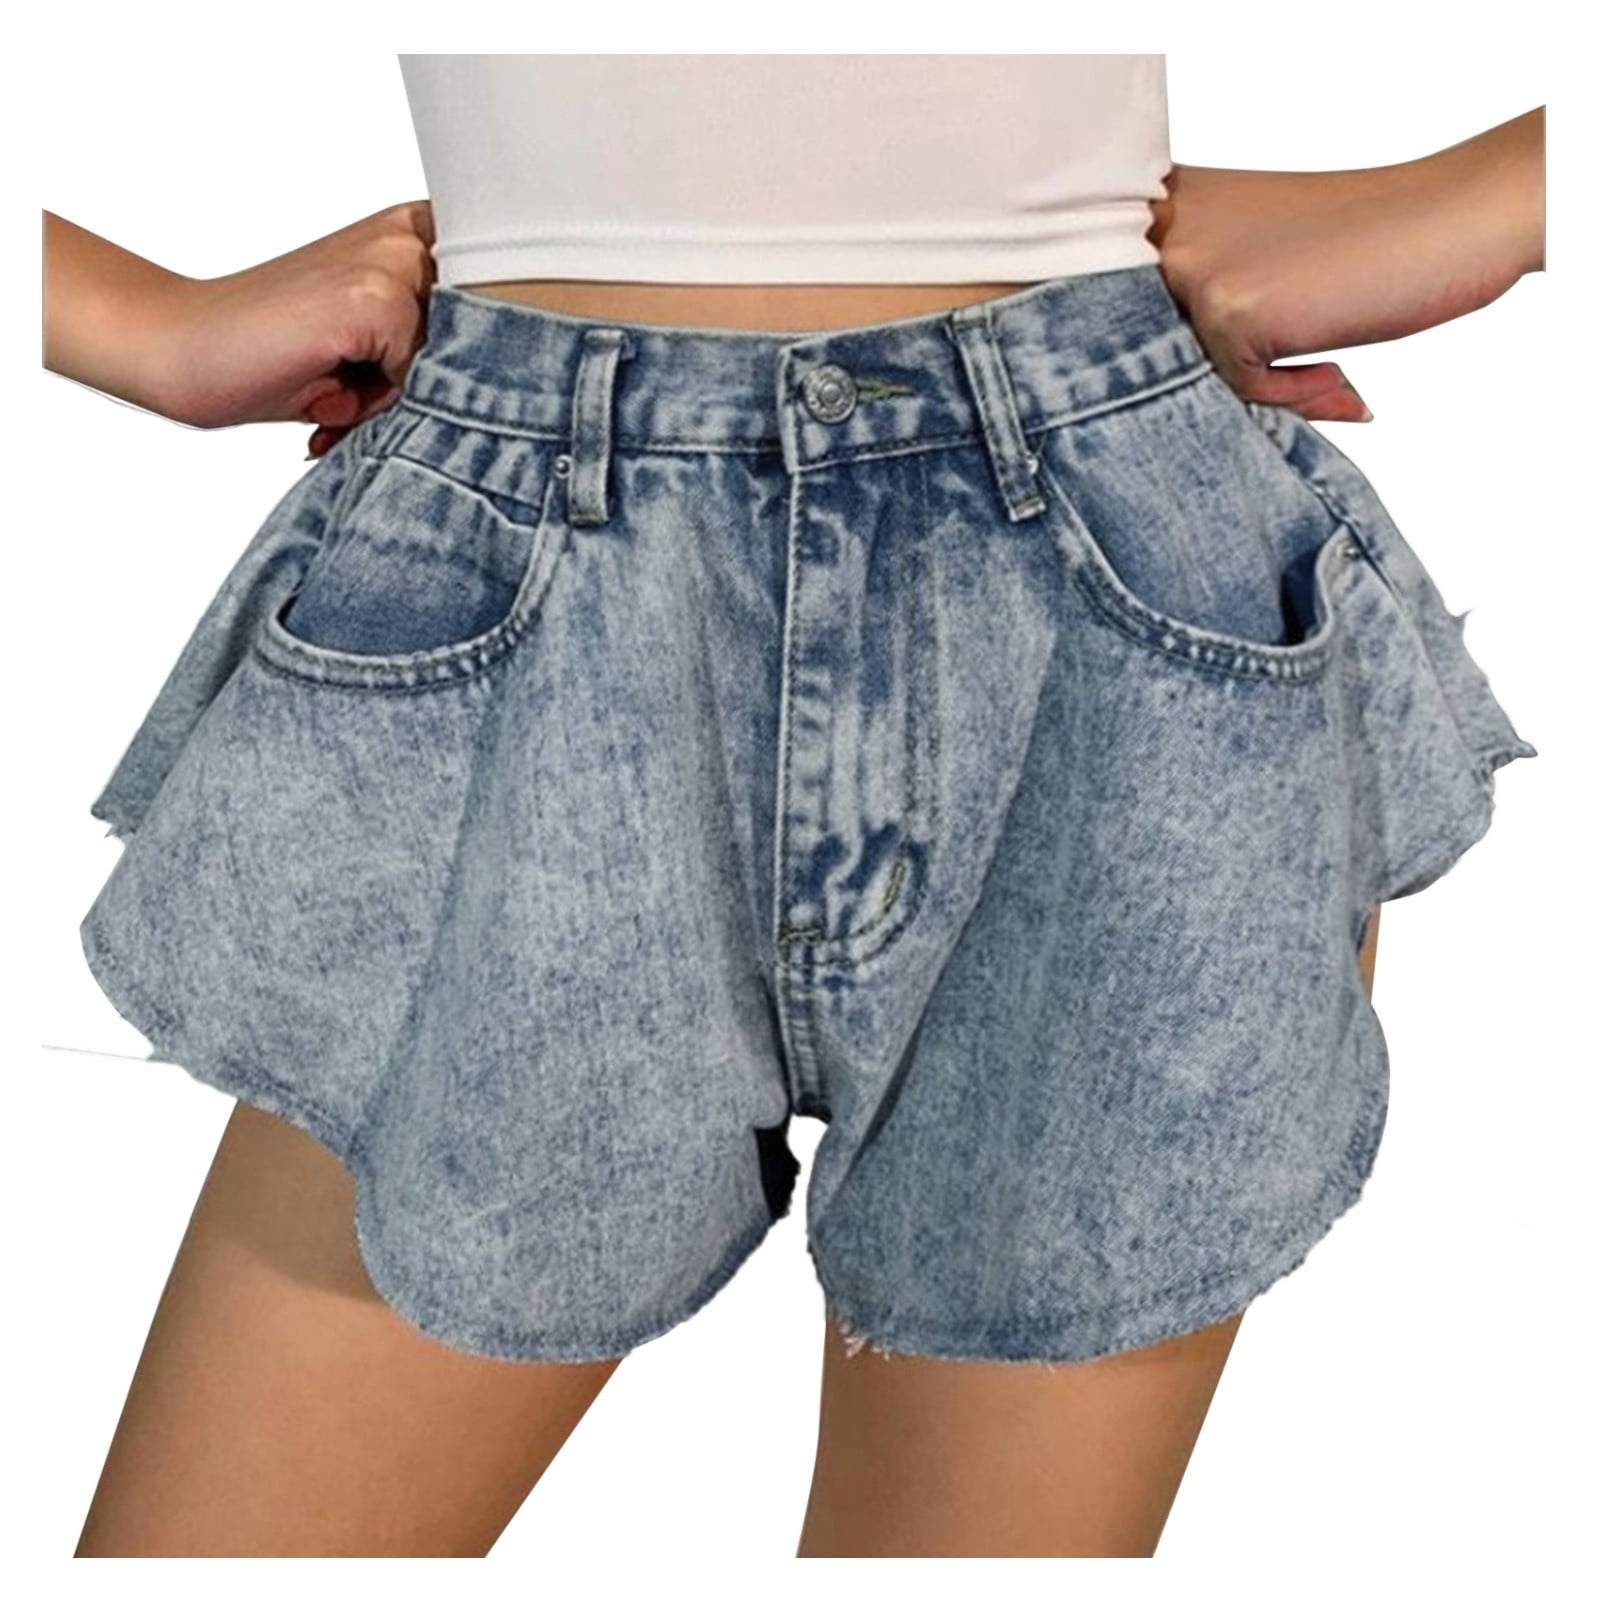 Fashion Women Summer Zipper Demin Skinny Jeans Stretch Drawstring Short Pants US